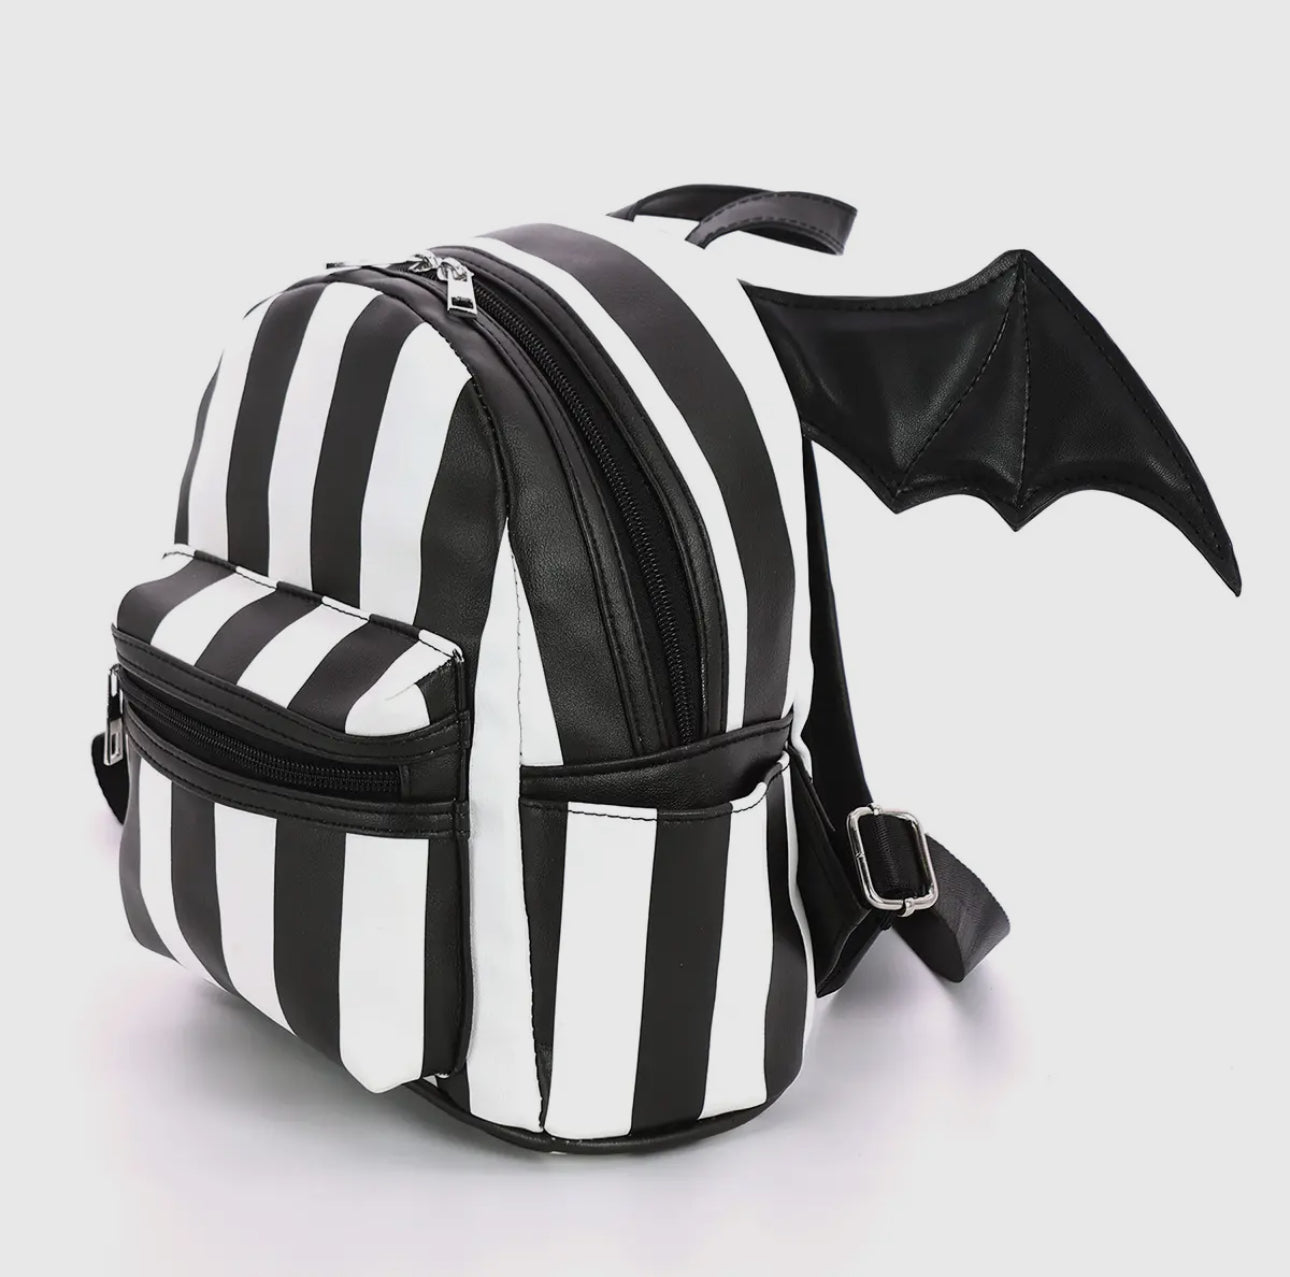 Bat Wing Striped Mini Backpack